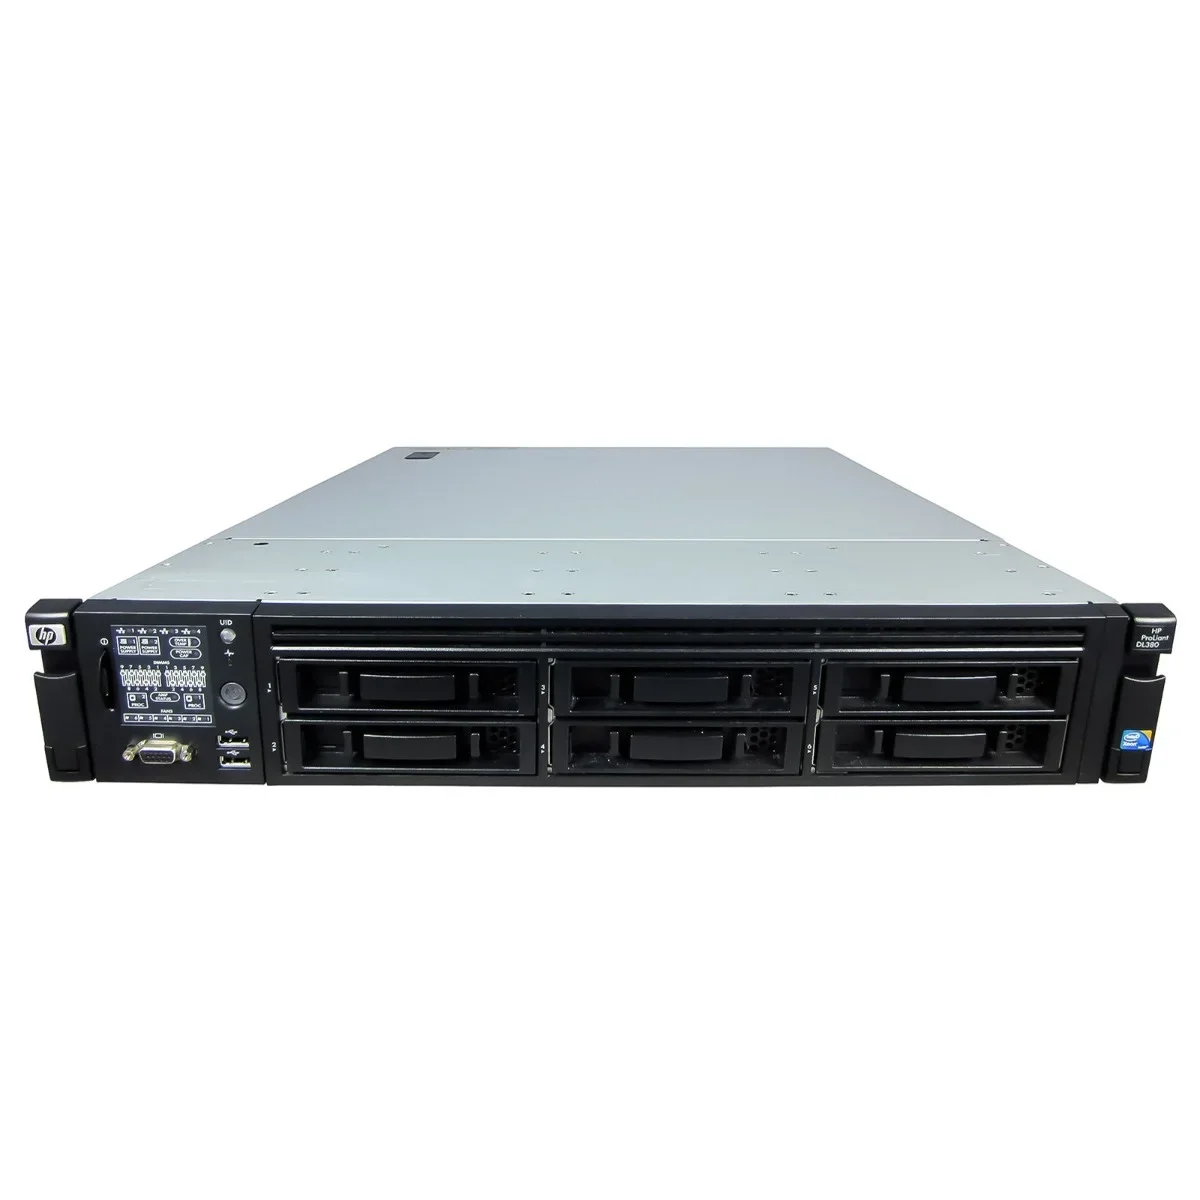 HPE ProLiant DL380 G7 2U Rack Server